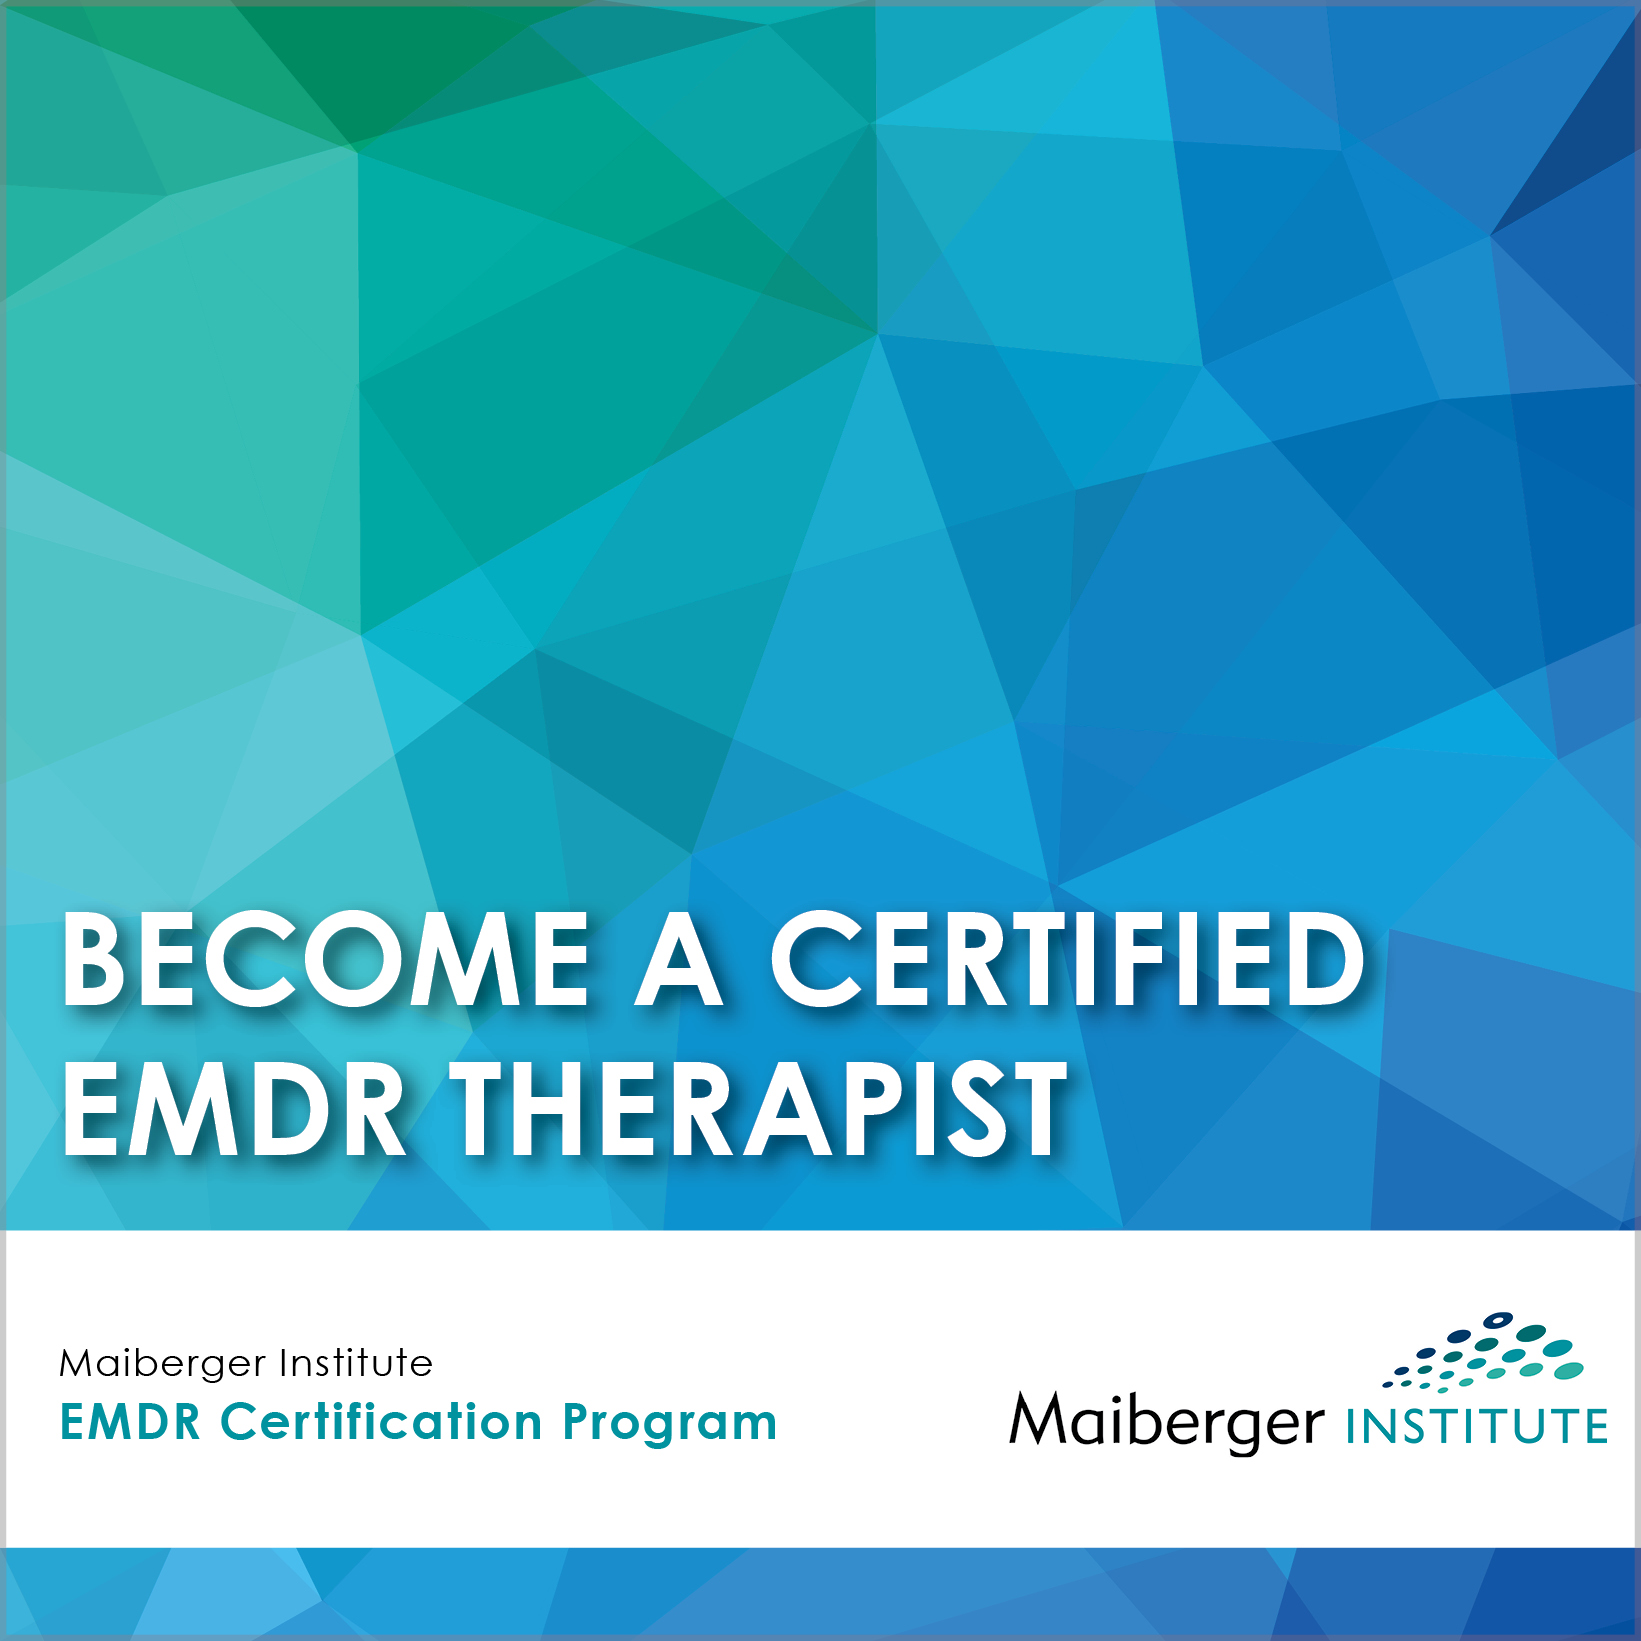 EMDR Certification Program - Maiberger Institute - Become a Certified EMDR Therapist